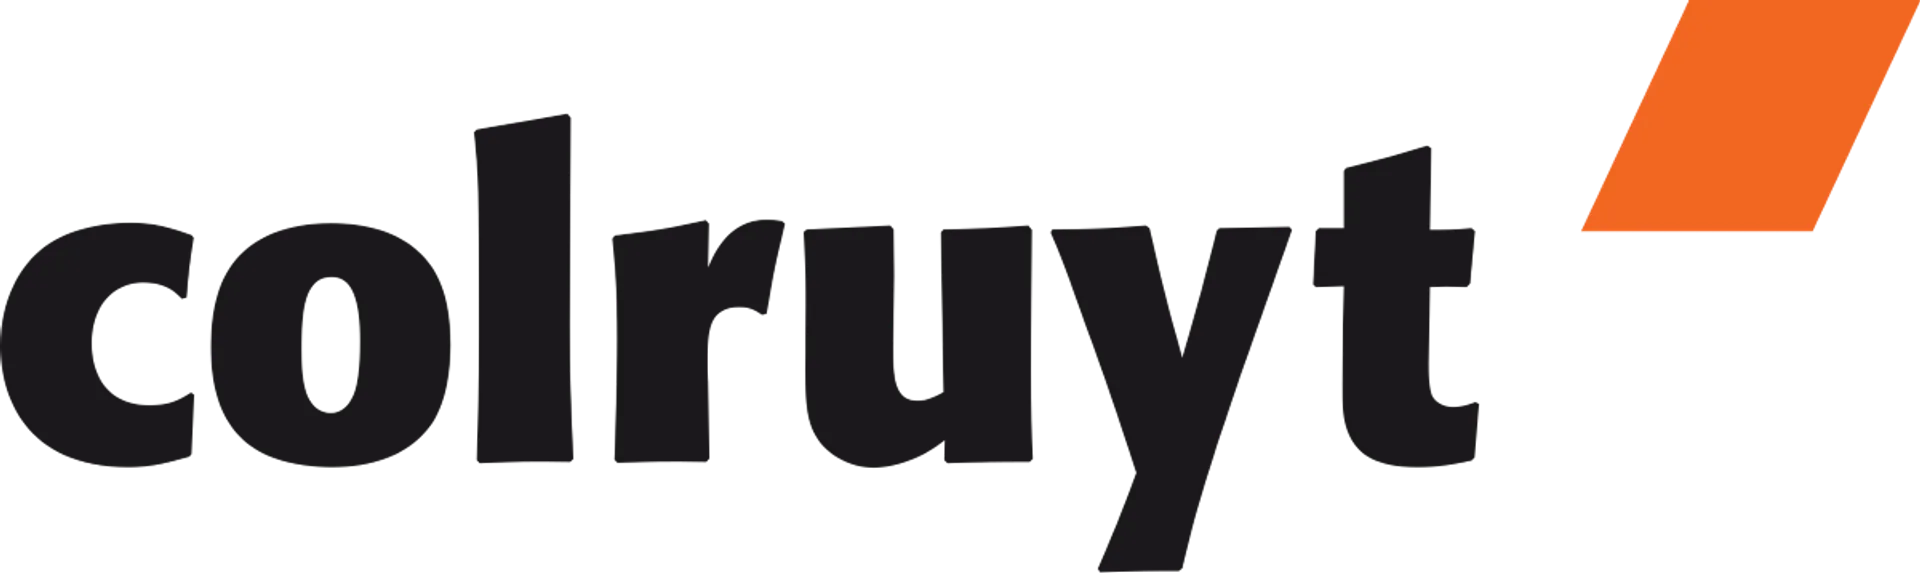 COLRUYT logo du catalogue